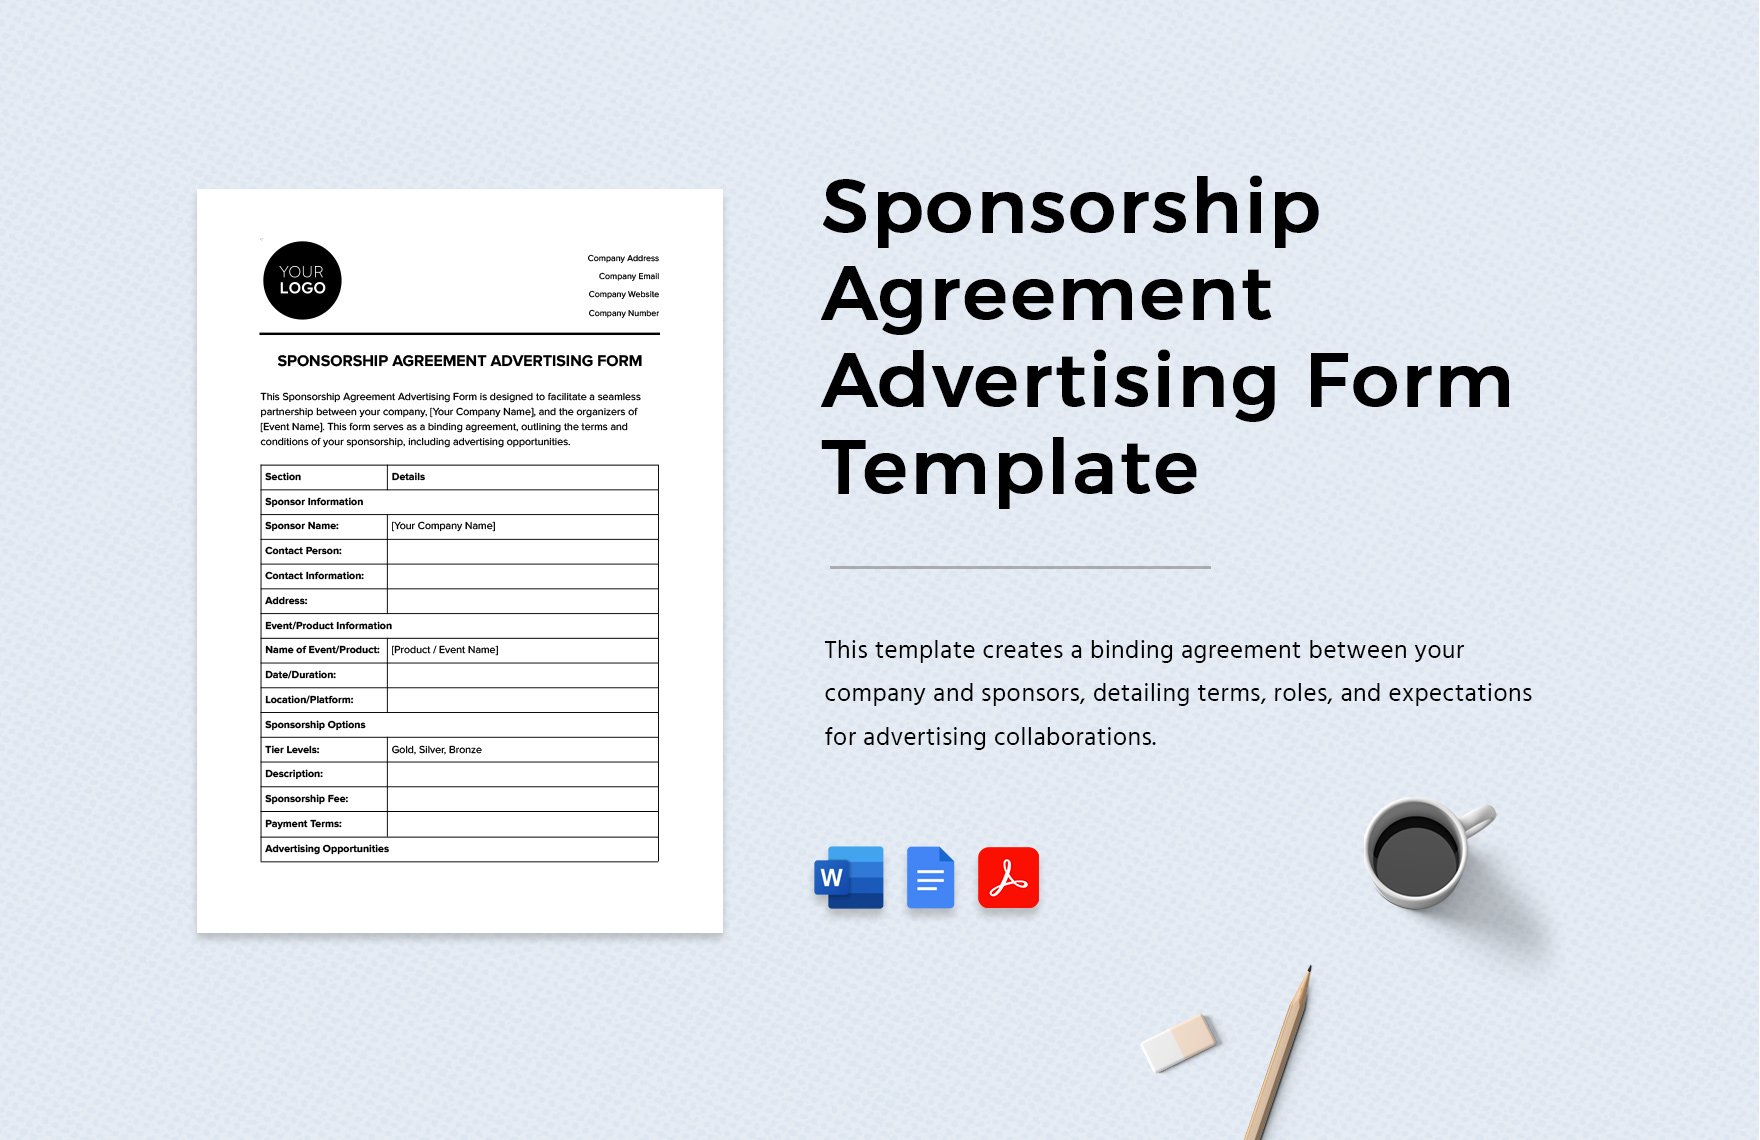 Sponsorship Agreement Advertising Form Template in Word, Google Docs, PDF